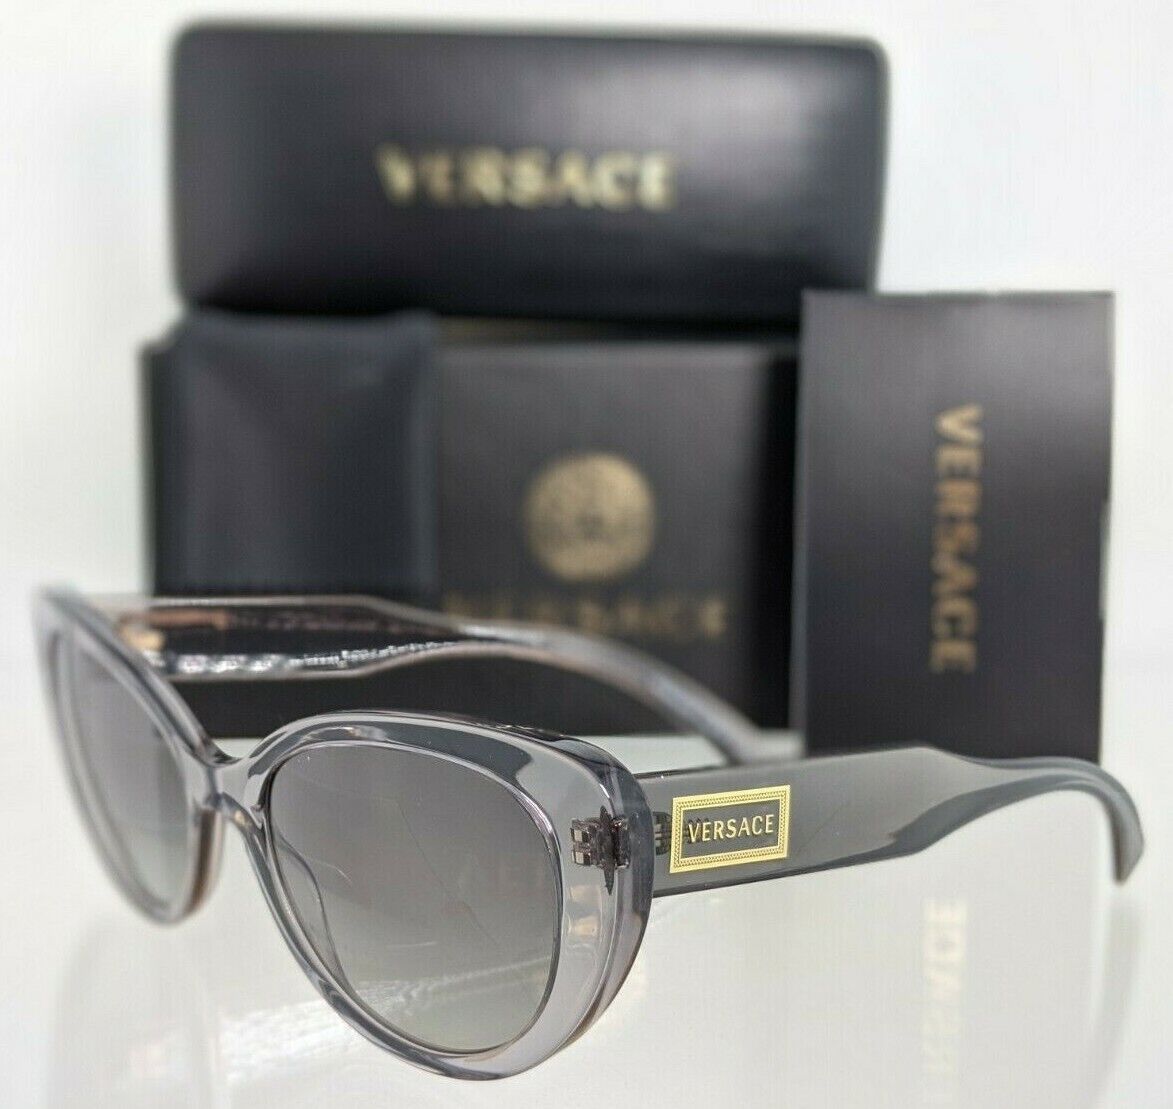 Brand New Authentic Versace Sunglasses Mod. 4378 593/11 54mm Gray Transparent